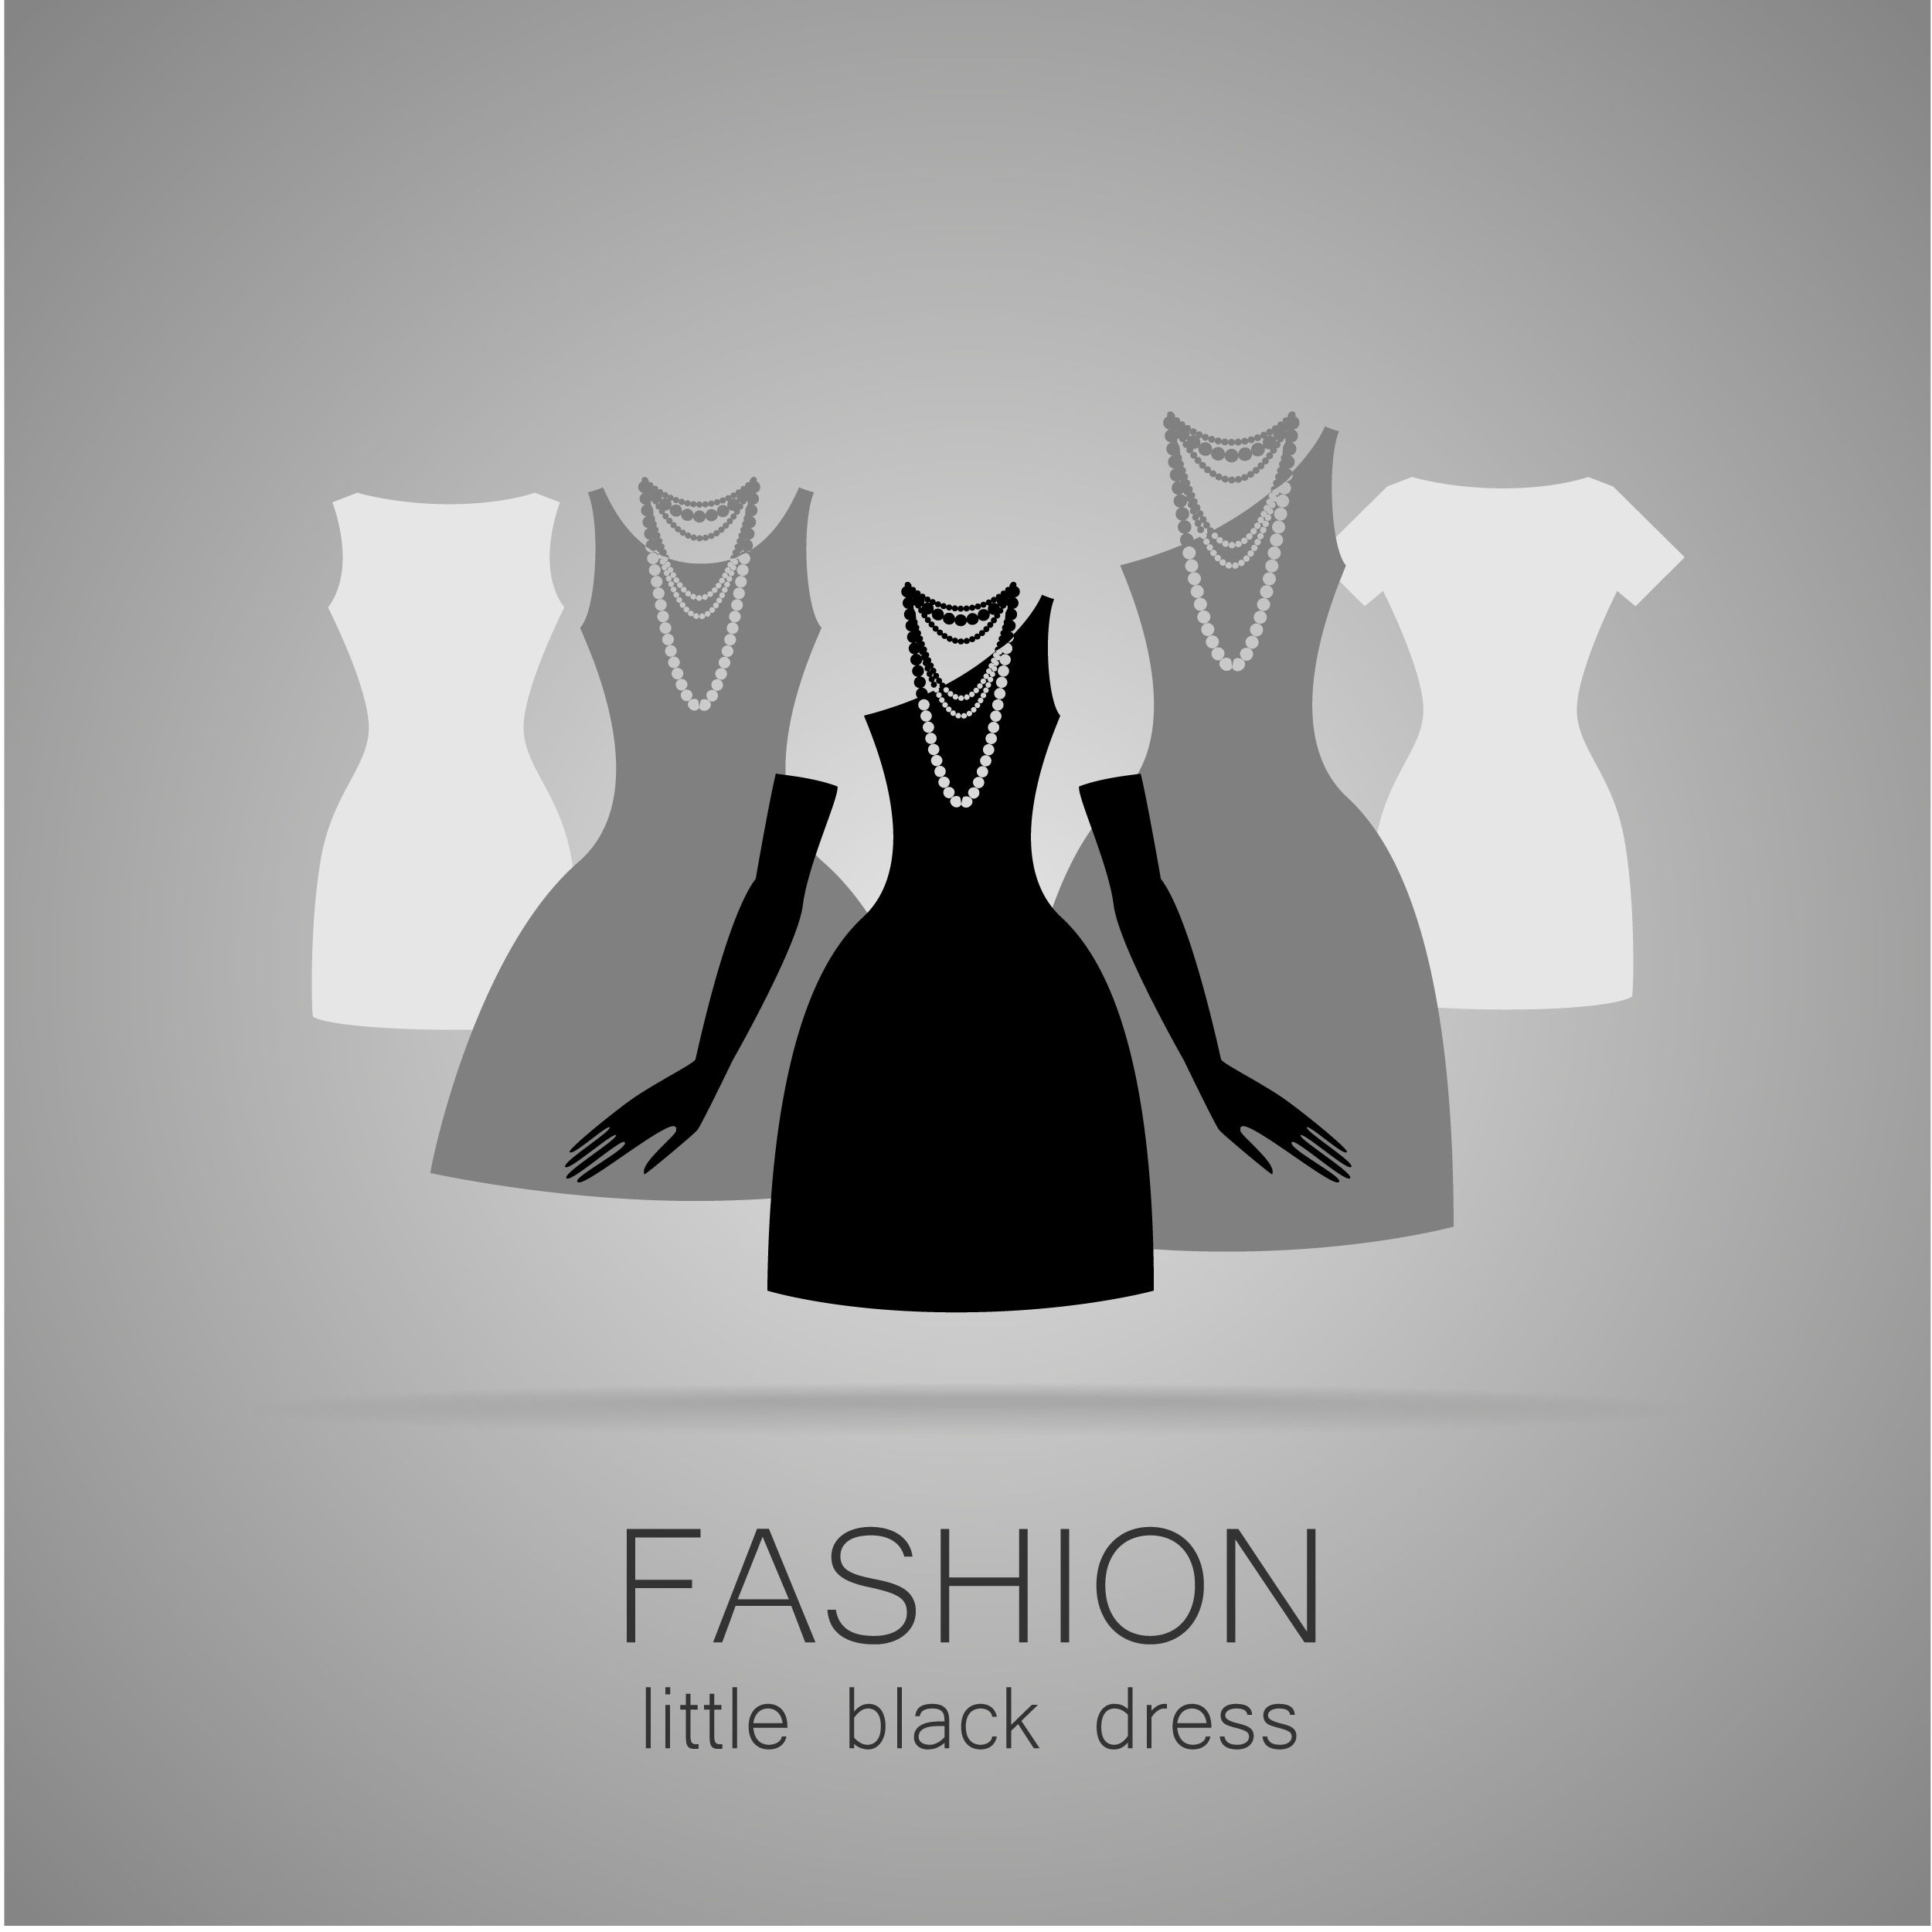 45483209 - black dress - classic fashion. template logo for a clothing store, women's boutique brand women's dresses.